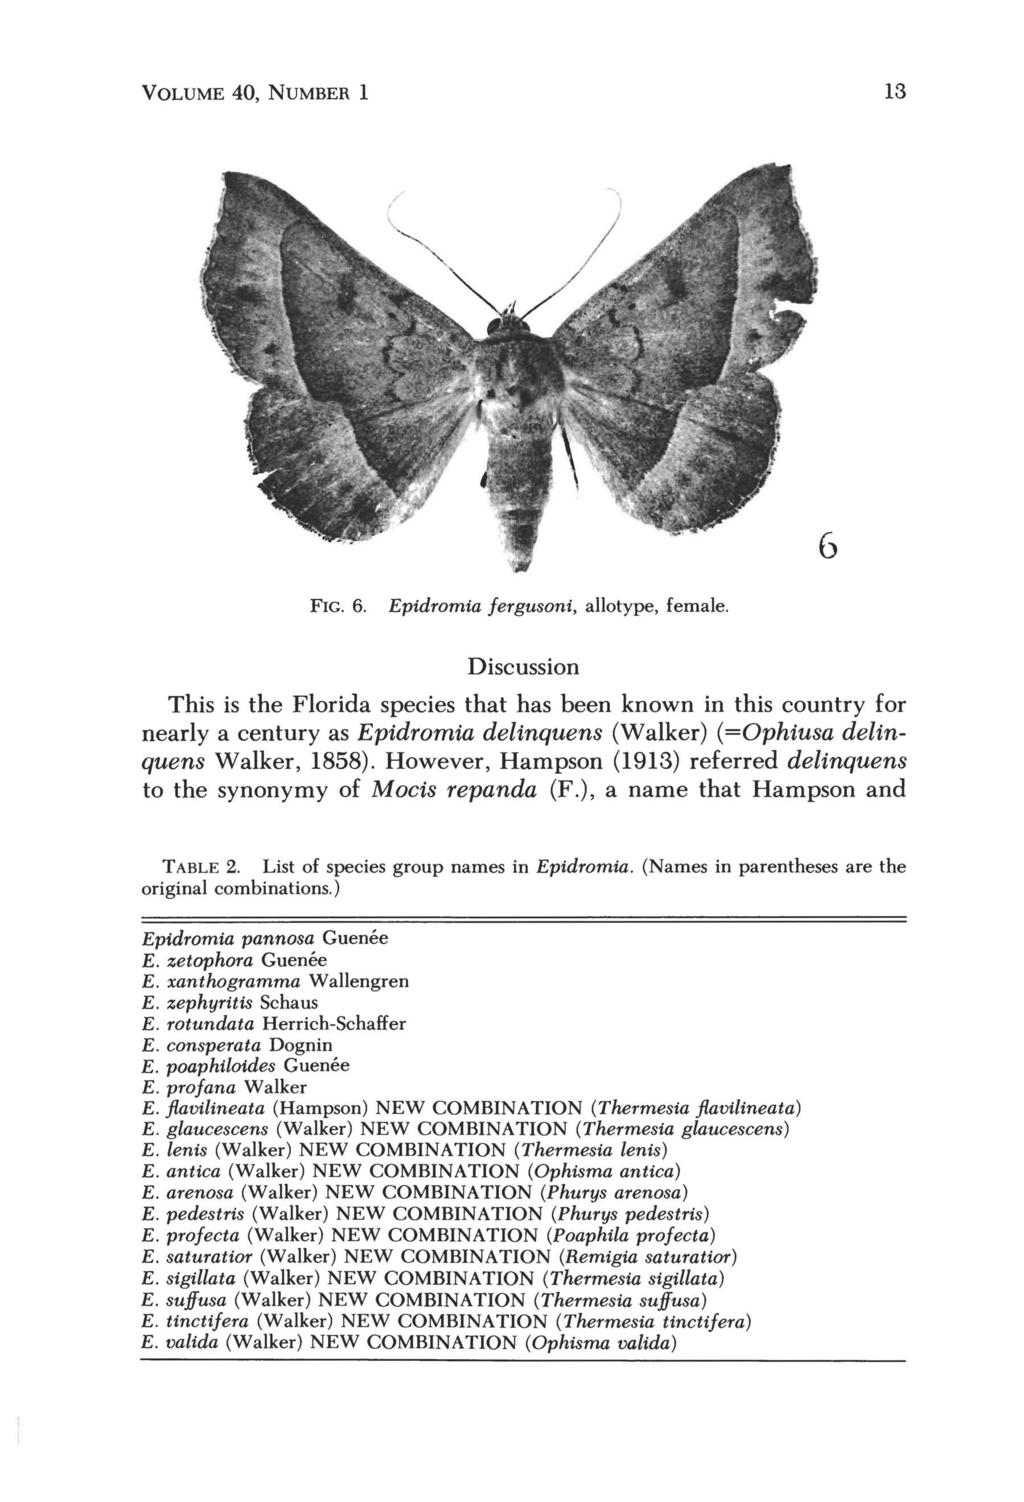 VOLUME 40, NUMBER 1 13 FIG. 6. Epidromia /ergusoni, allotype, female.